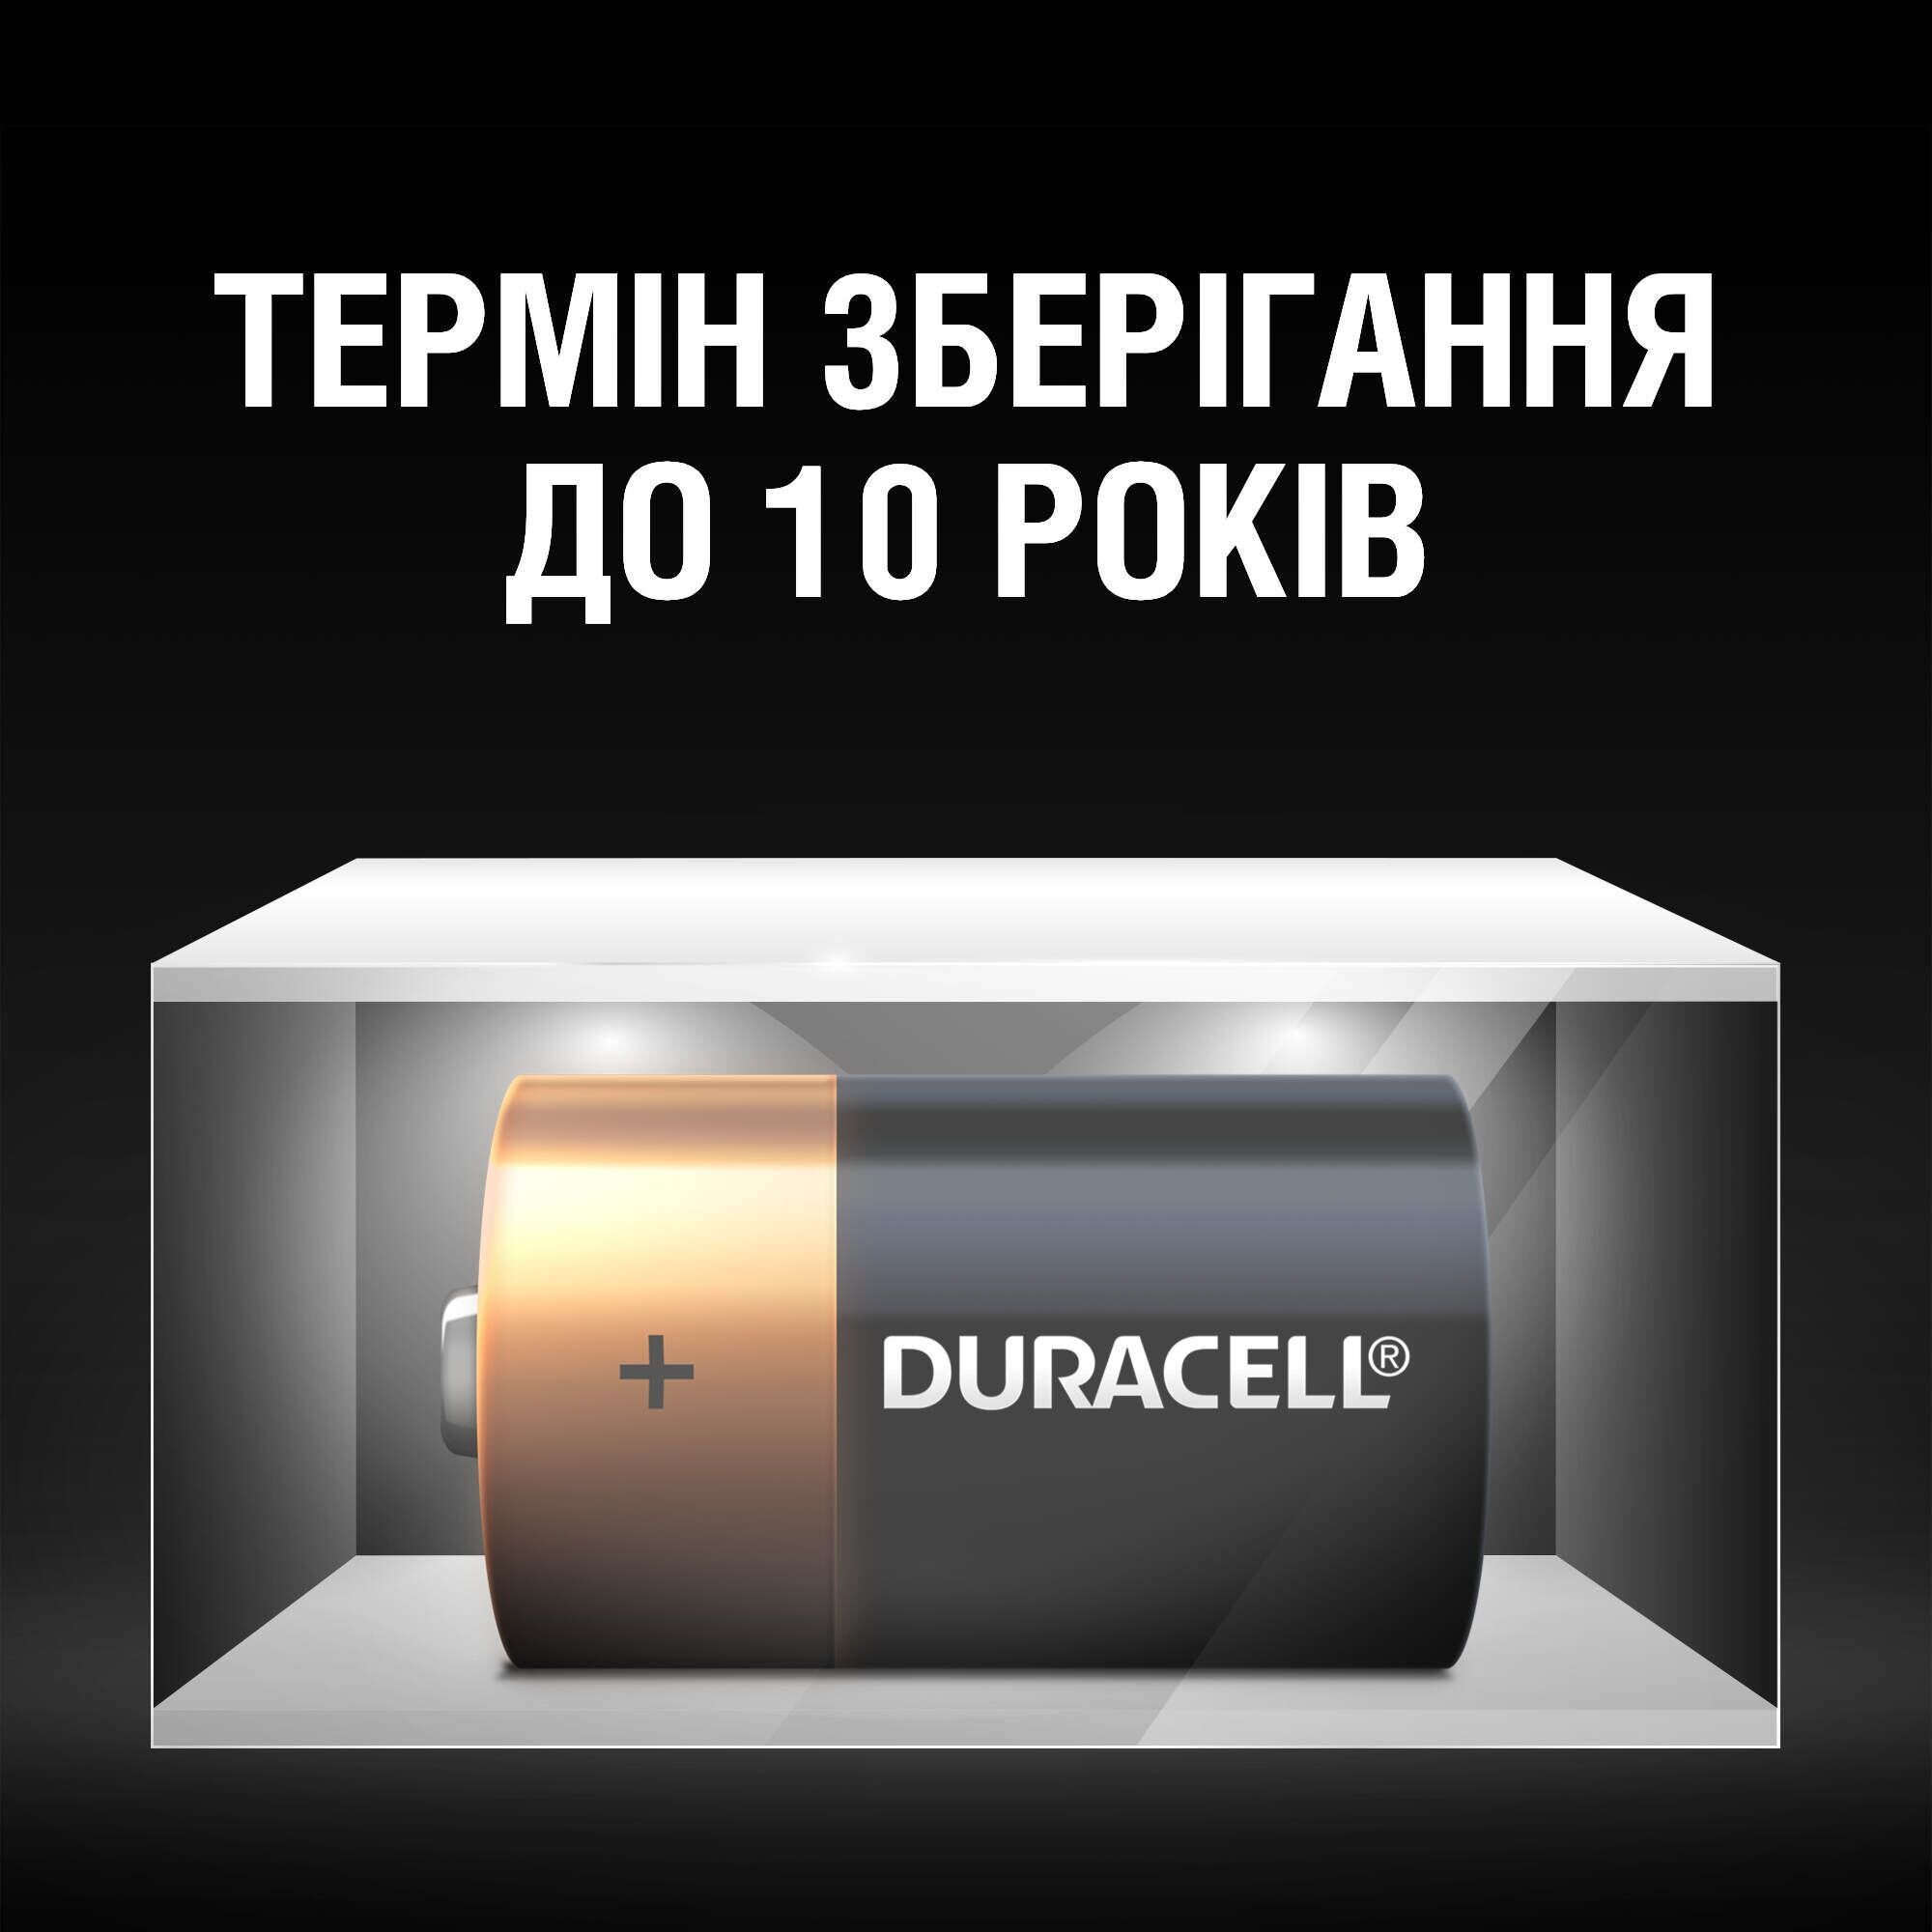 Щелочные батарейки Duracell 1.5 V D LR20/MN1300, 2 шт. (706010) - фото 6